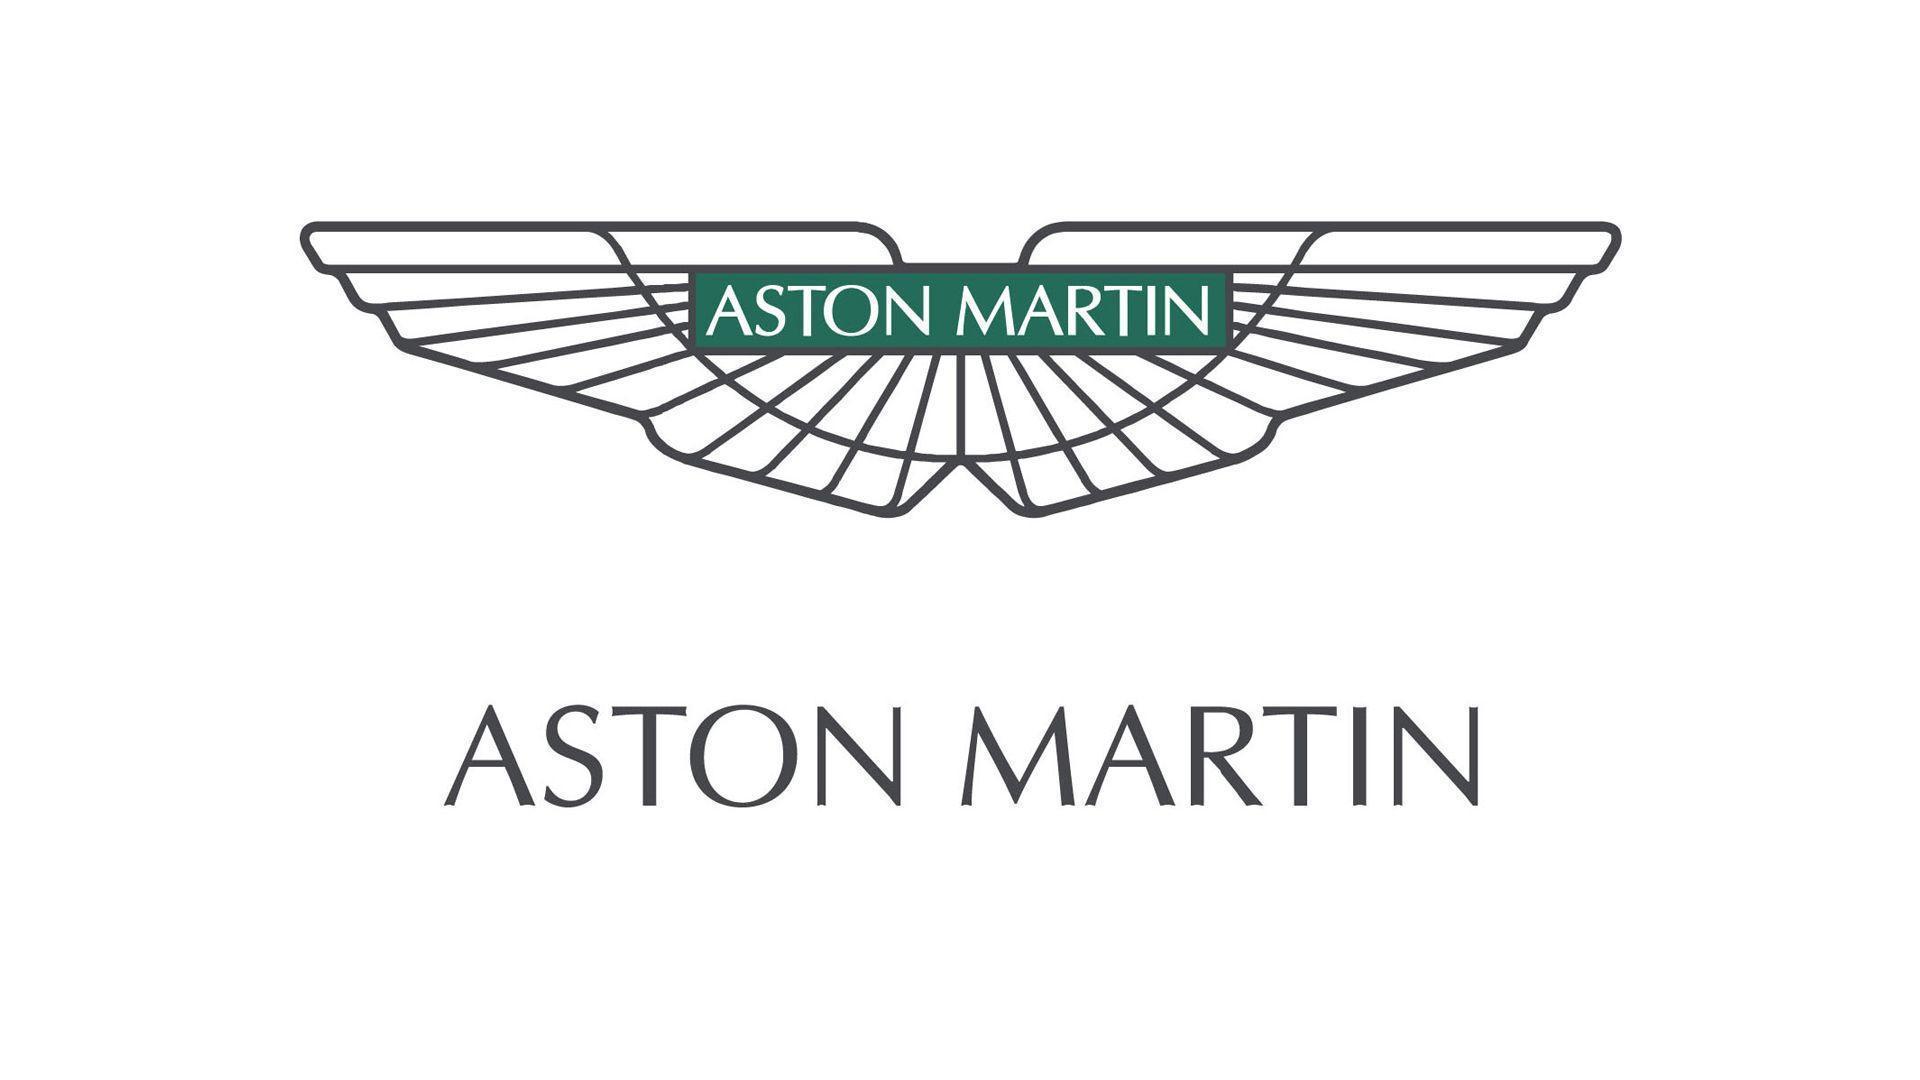 Aston Martin logo wallpaper. HD Desktop Wallpaper